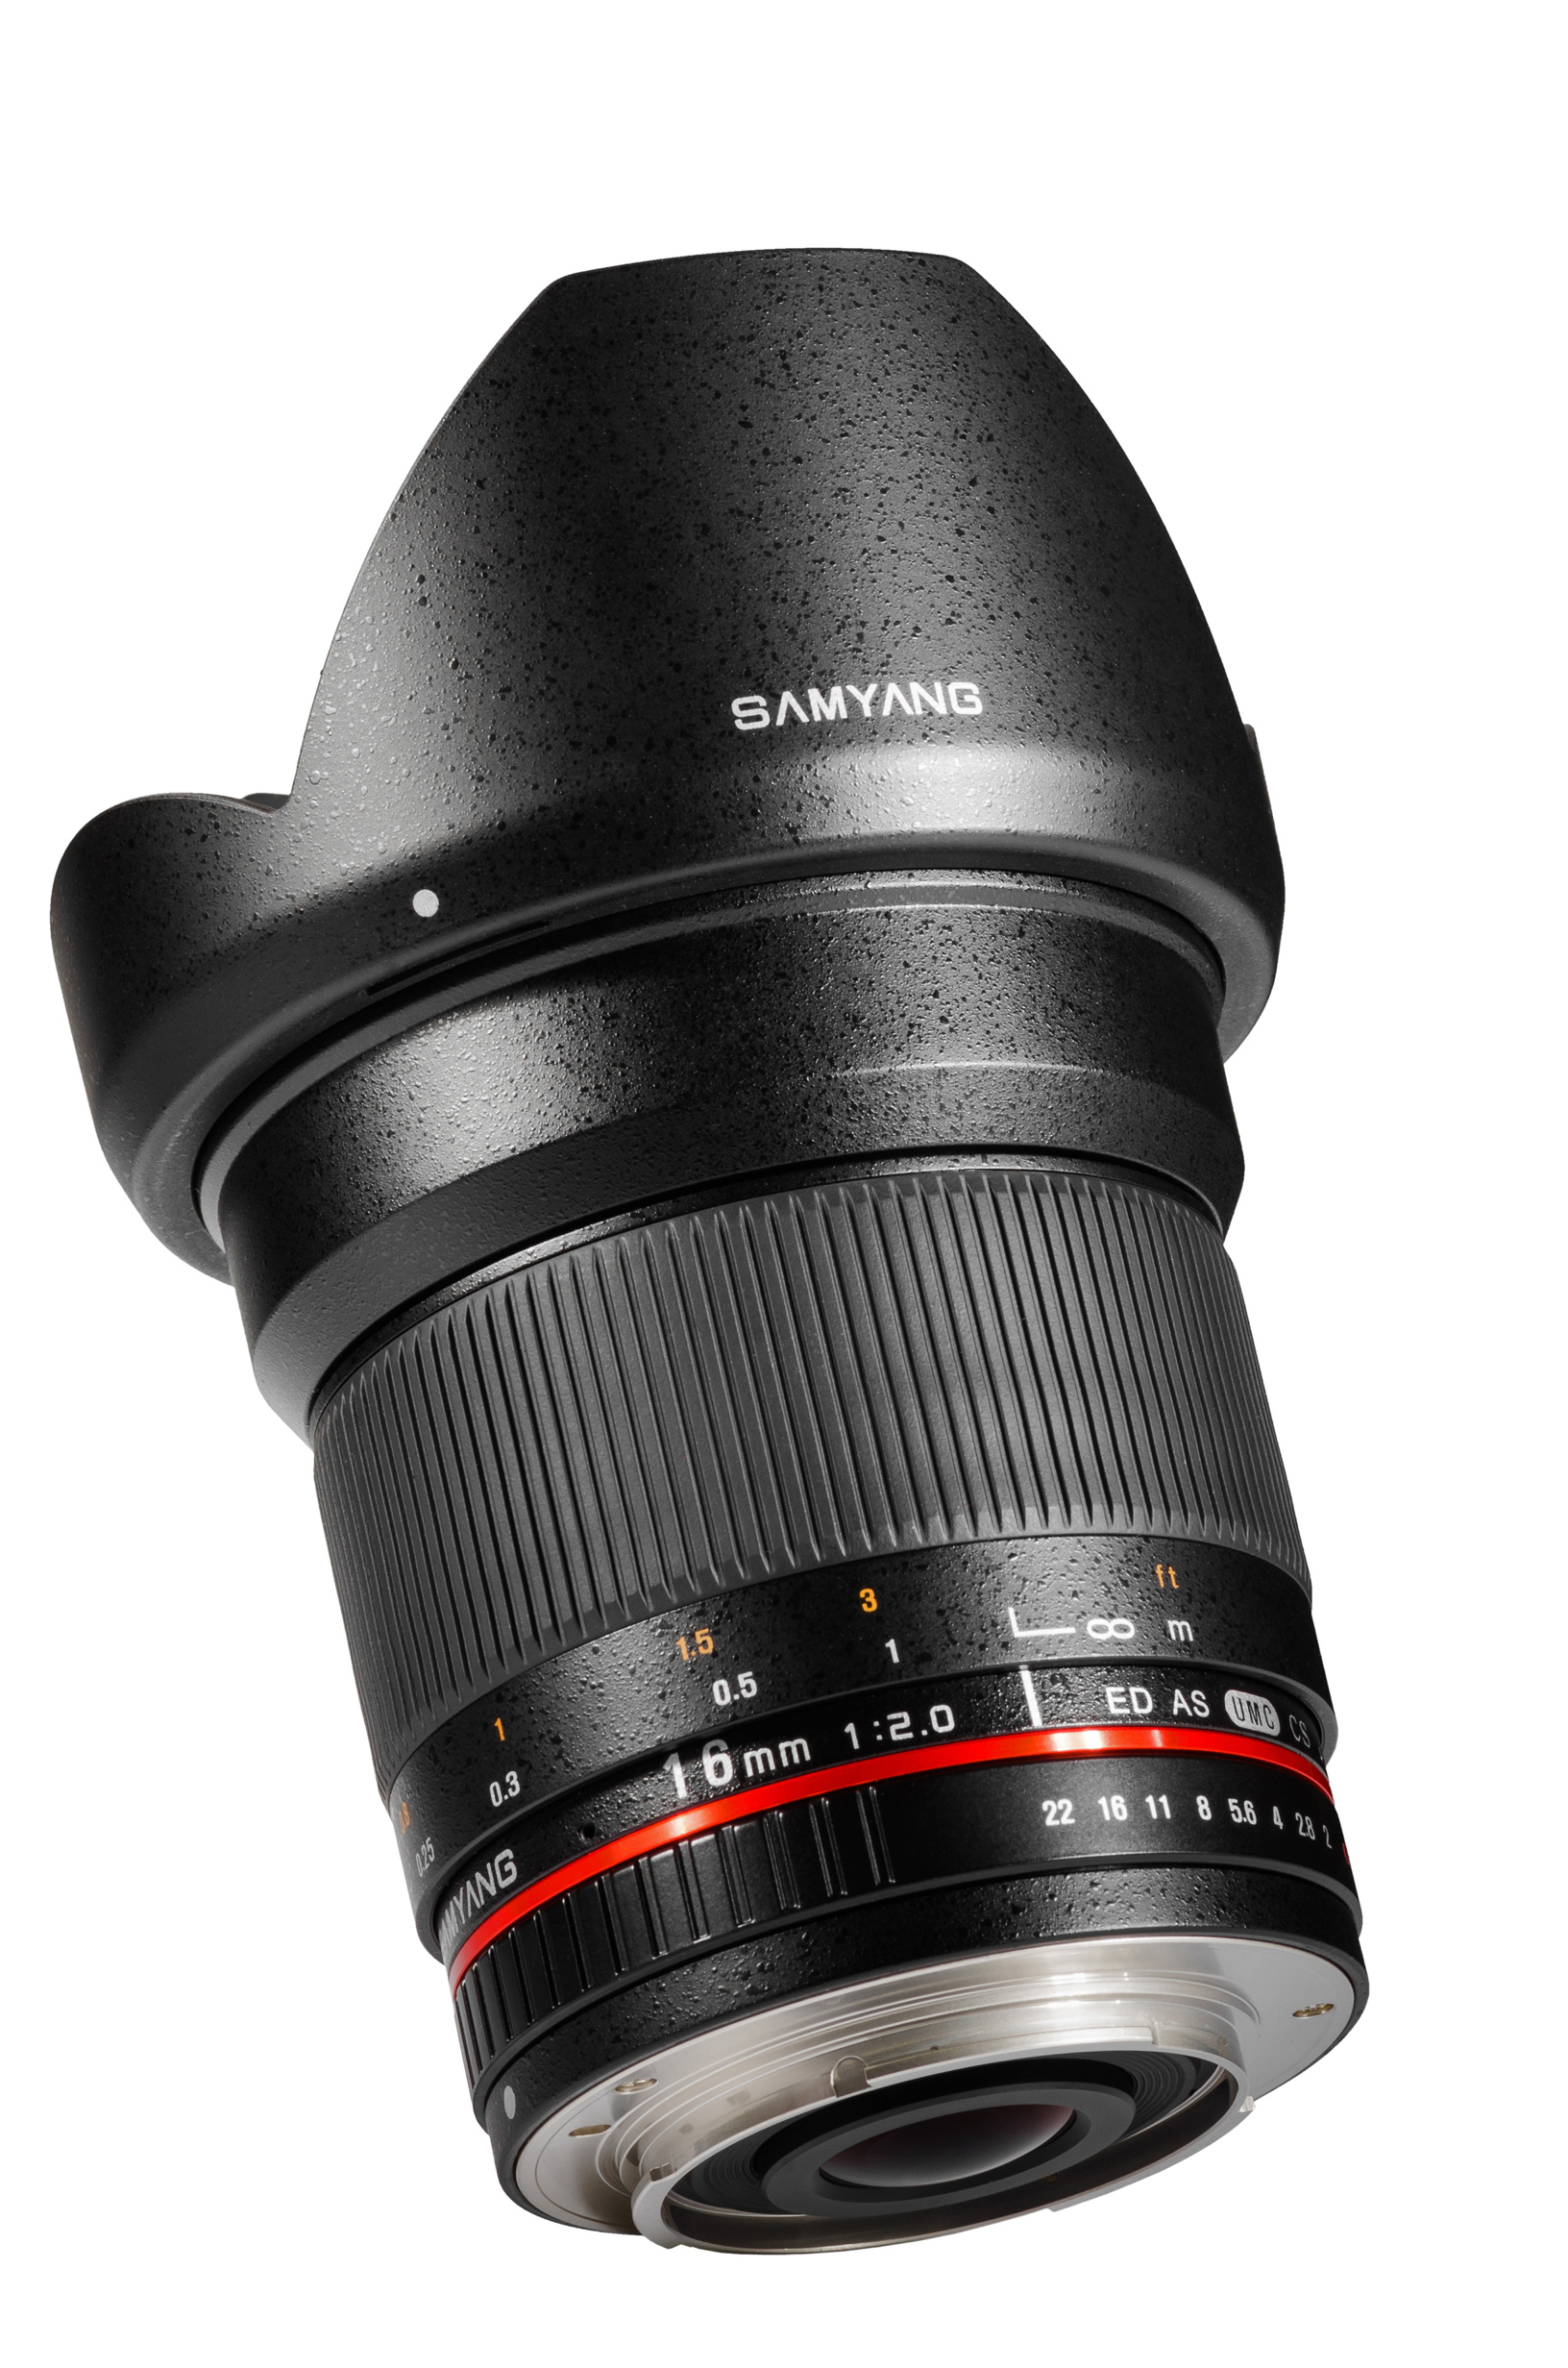 Samyang 16mm f/2.0 Sony A